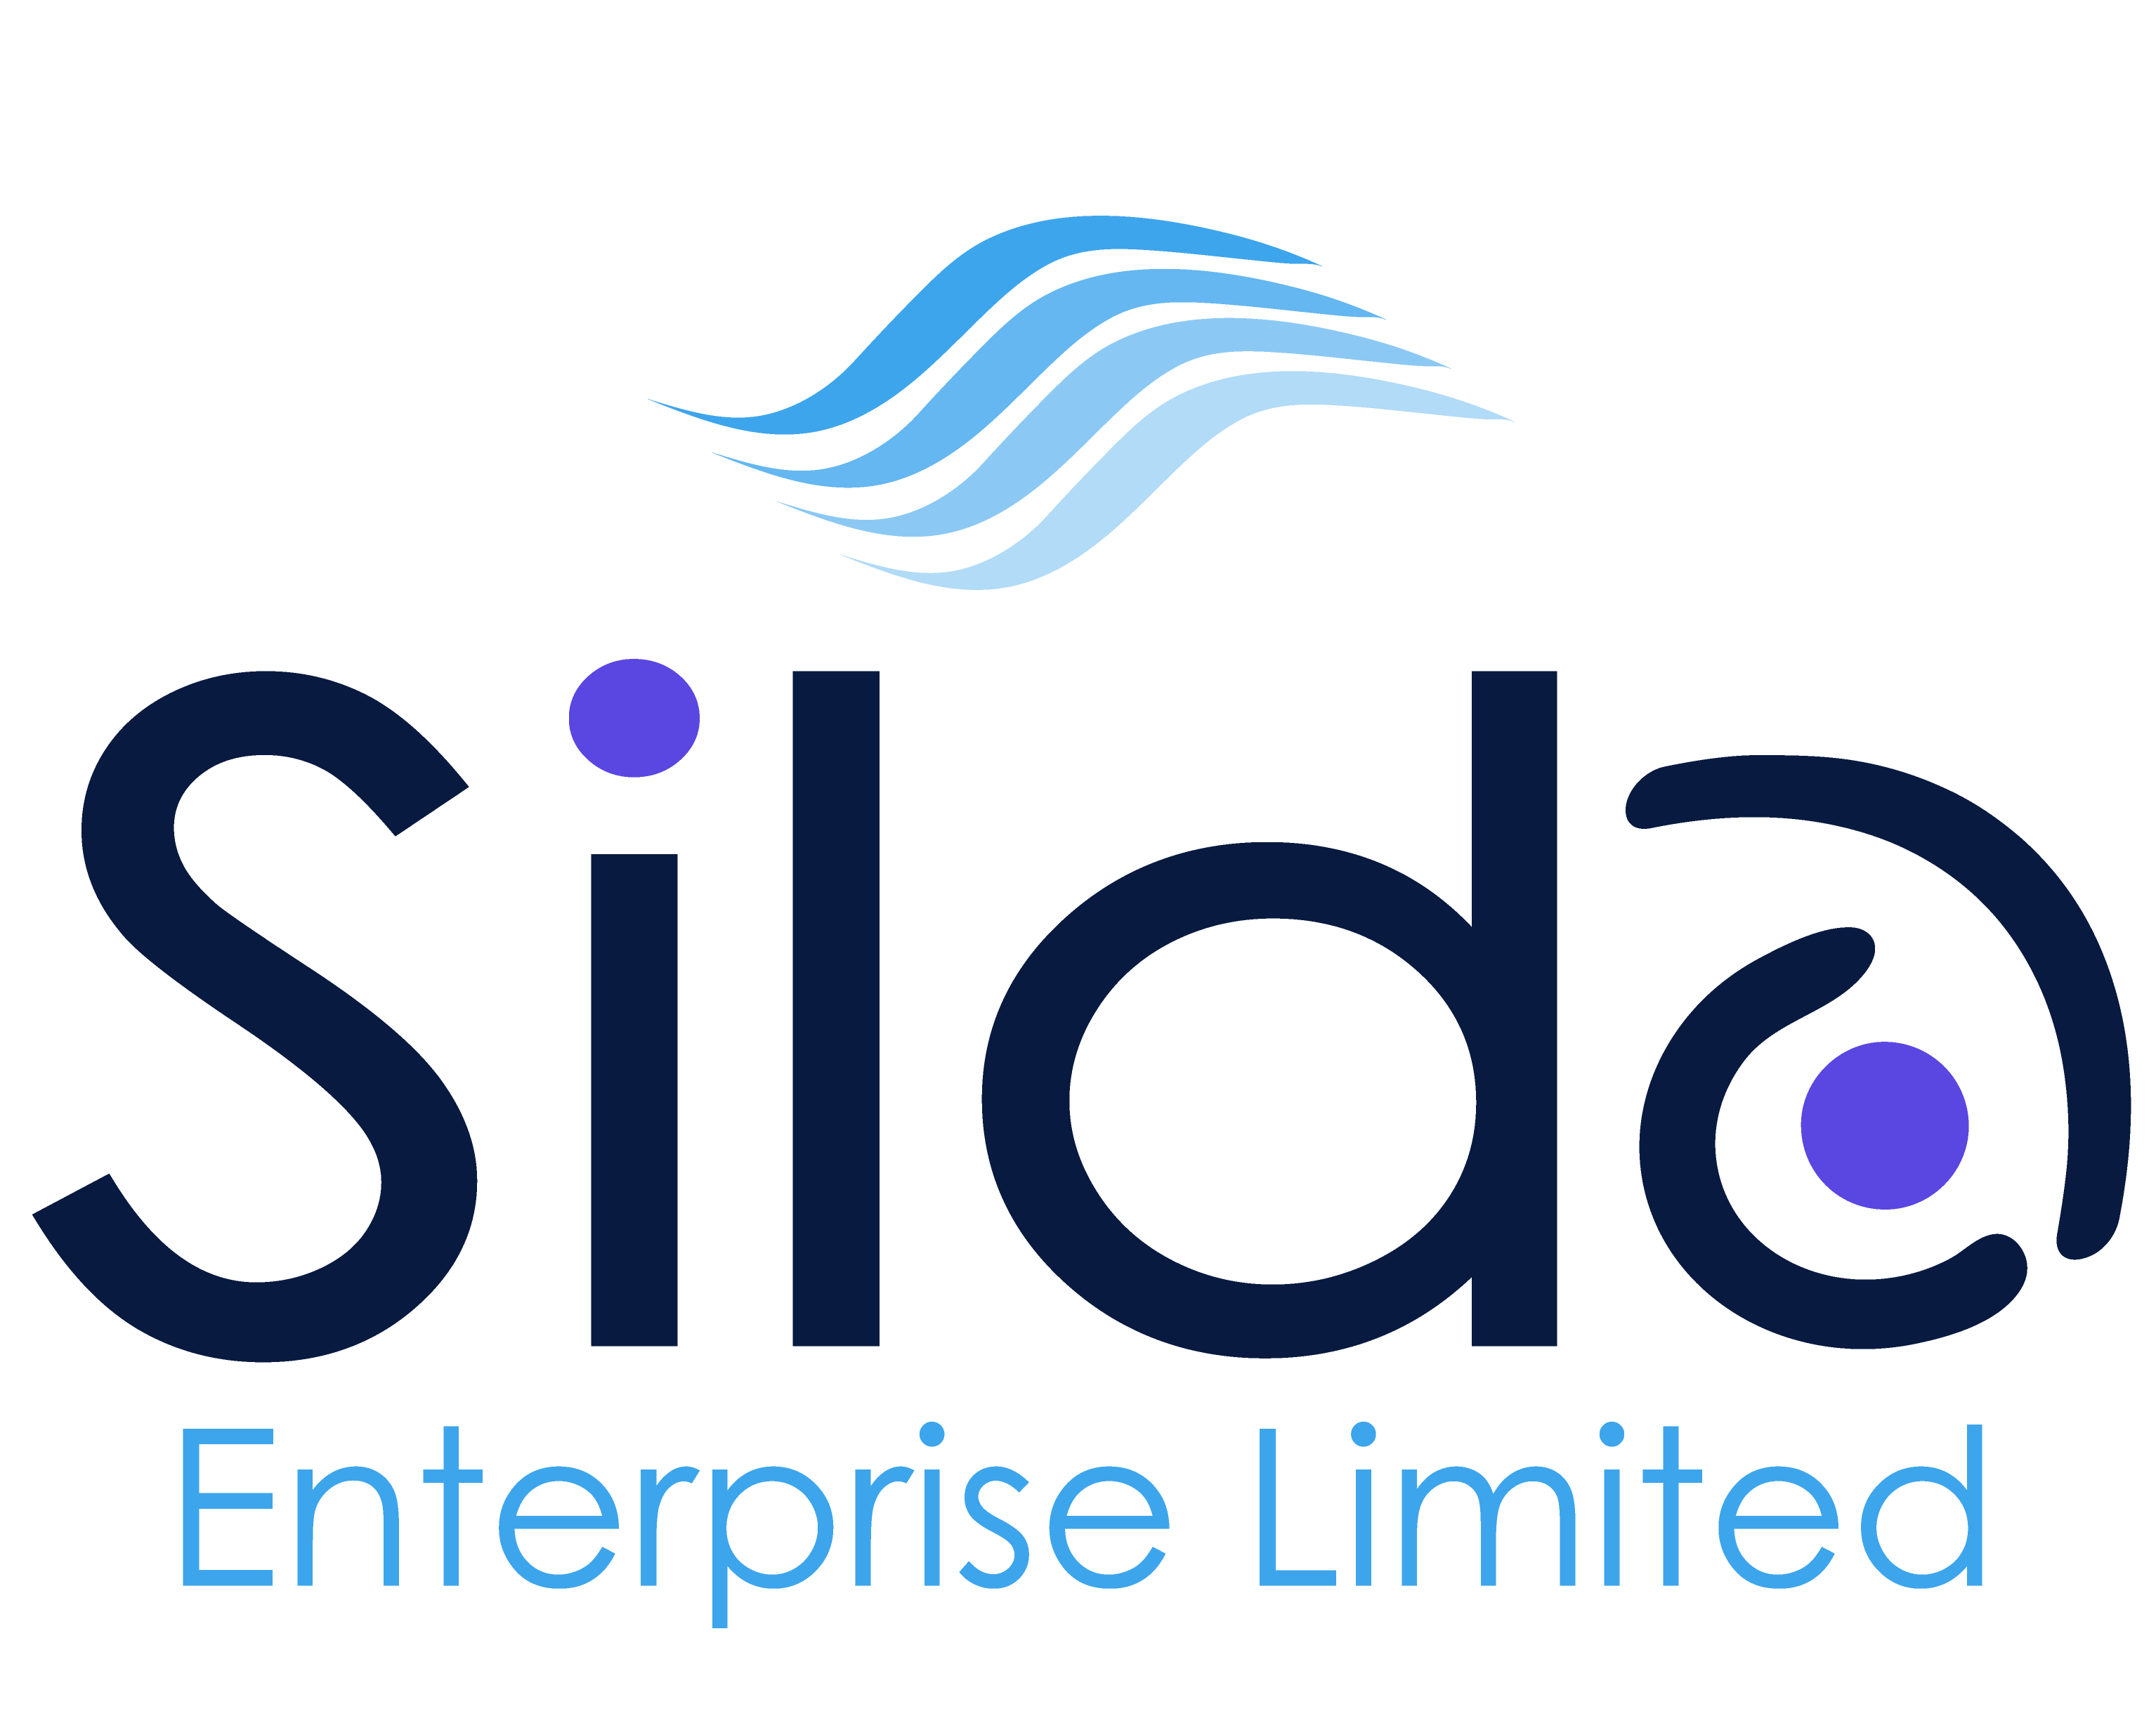 Silda Enterprise Limited